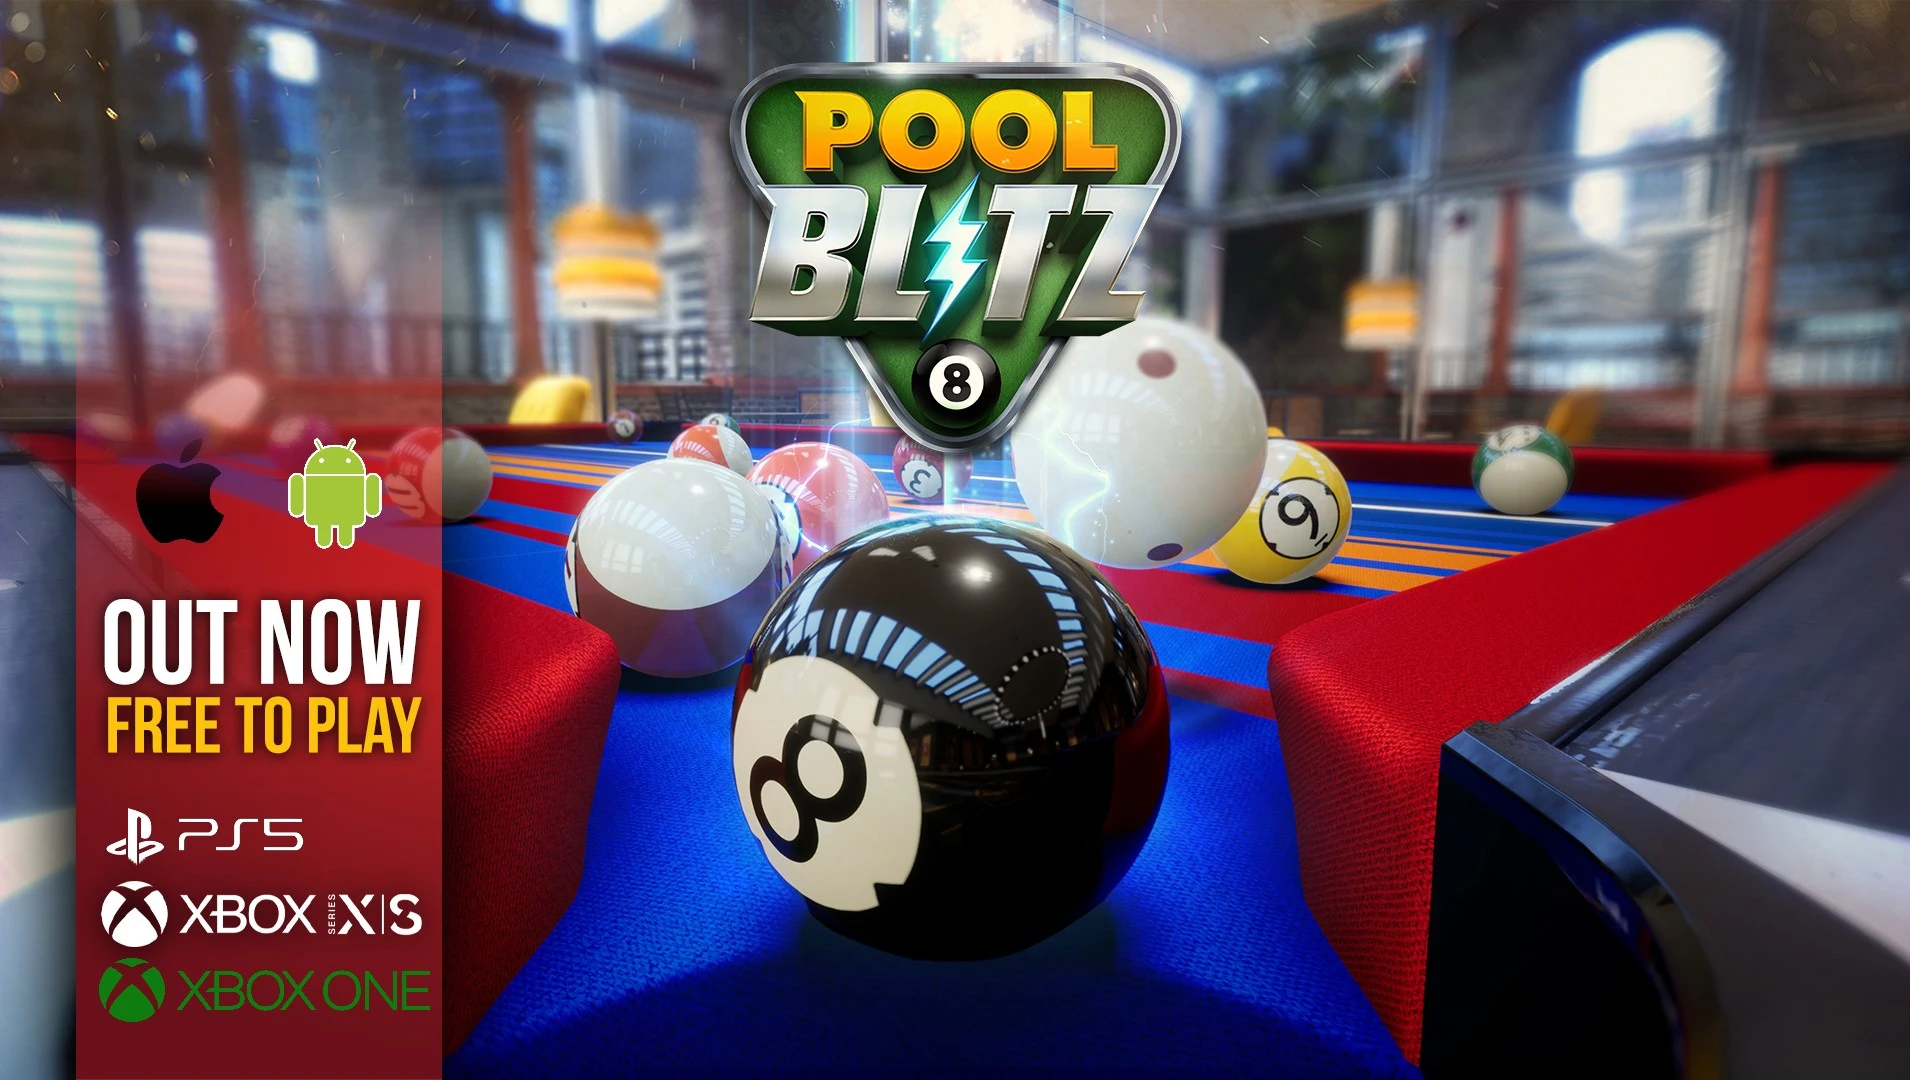 8 Ball Blitz - Billiards Games - Apps on Google Play